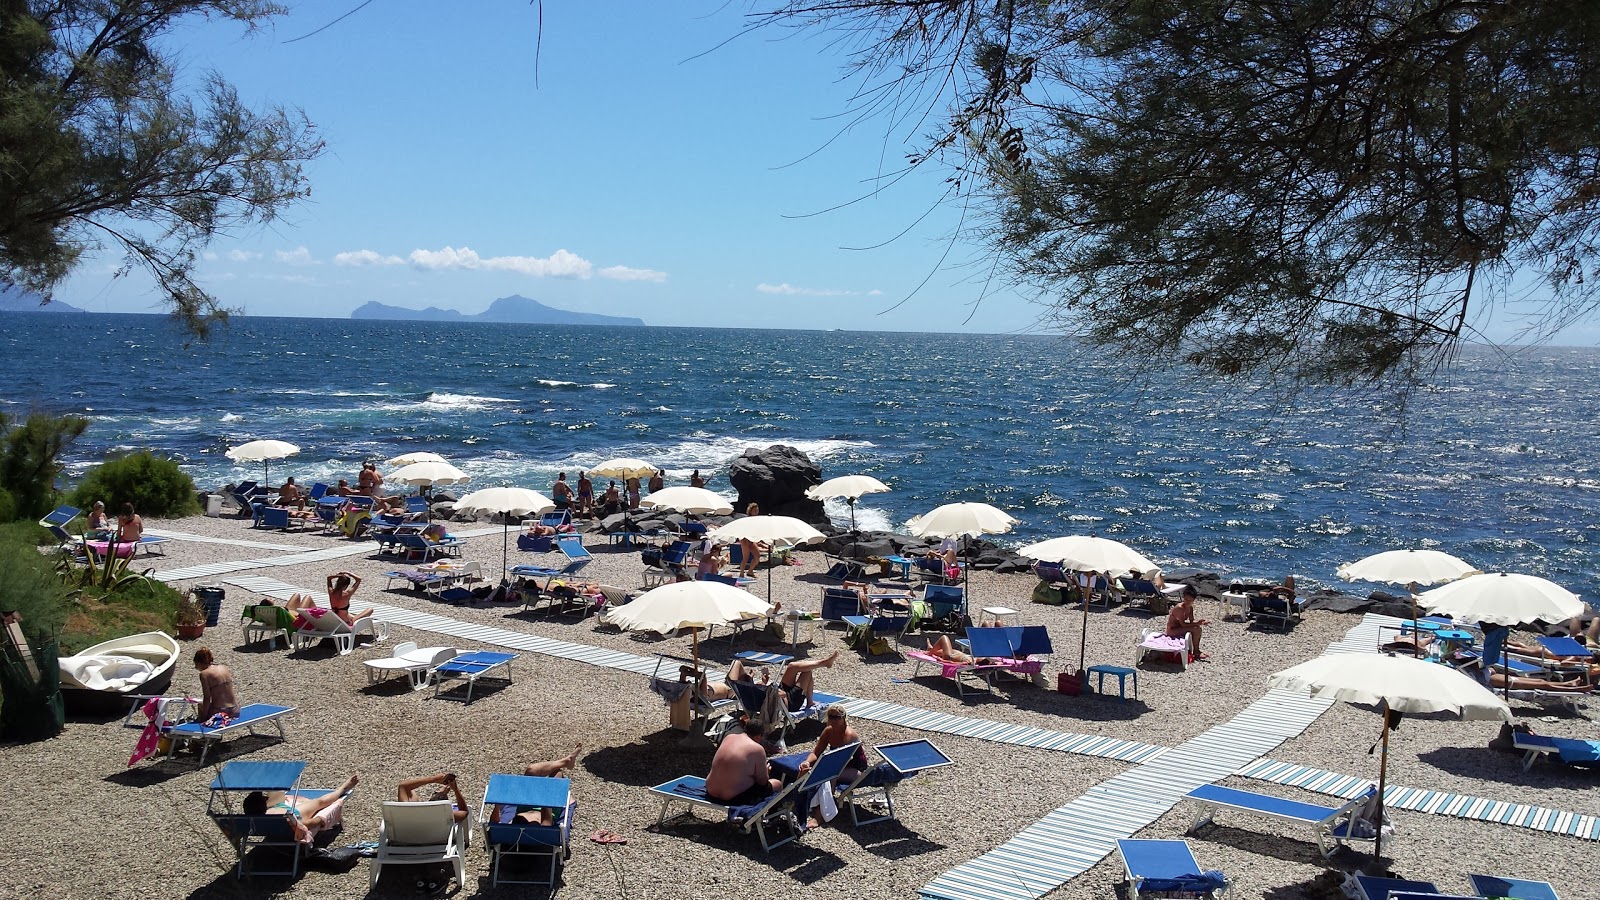 Spiaggia di Punta Quattroventi'in fotoğrafı hafif ince çakıl taş yüzey ile